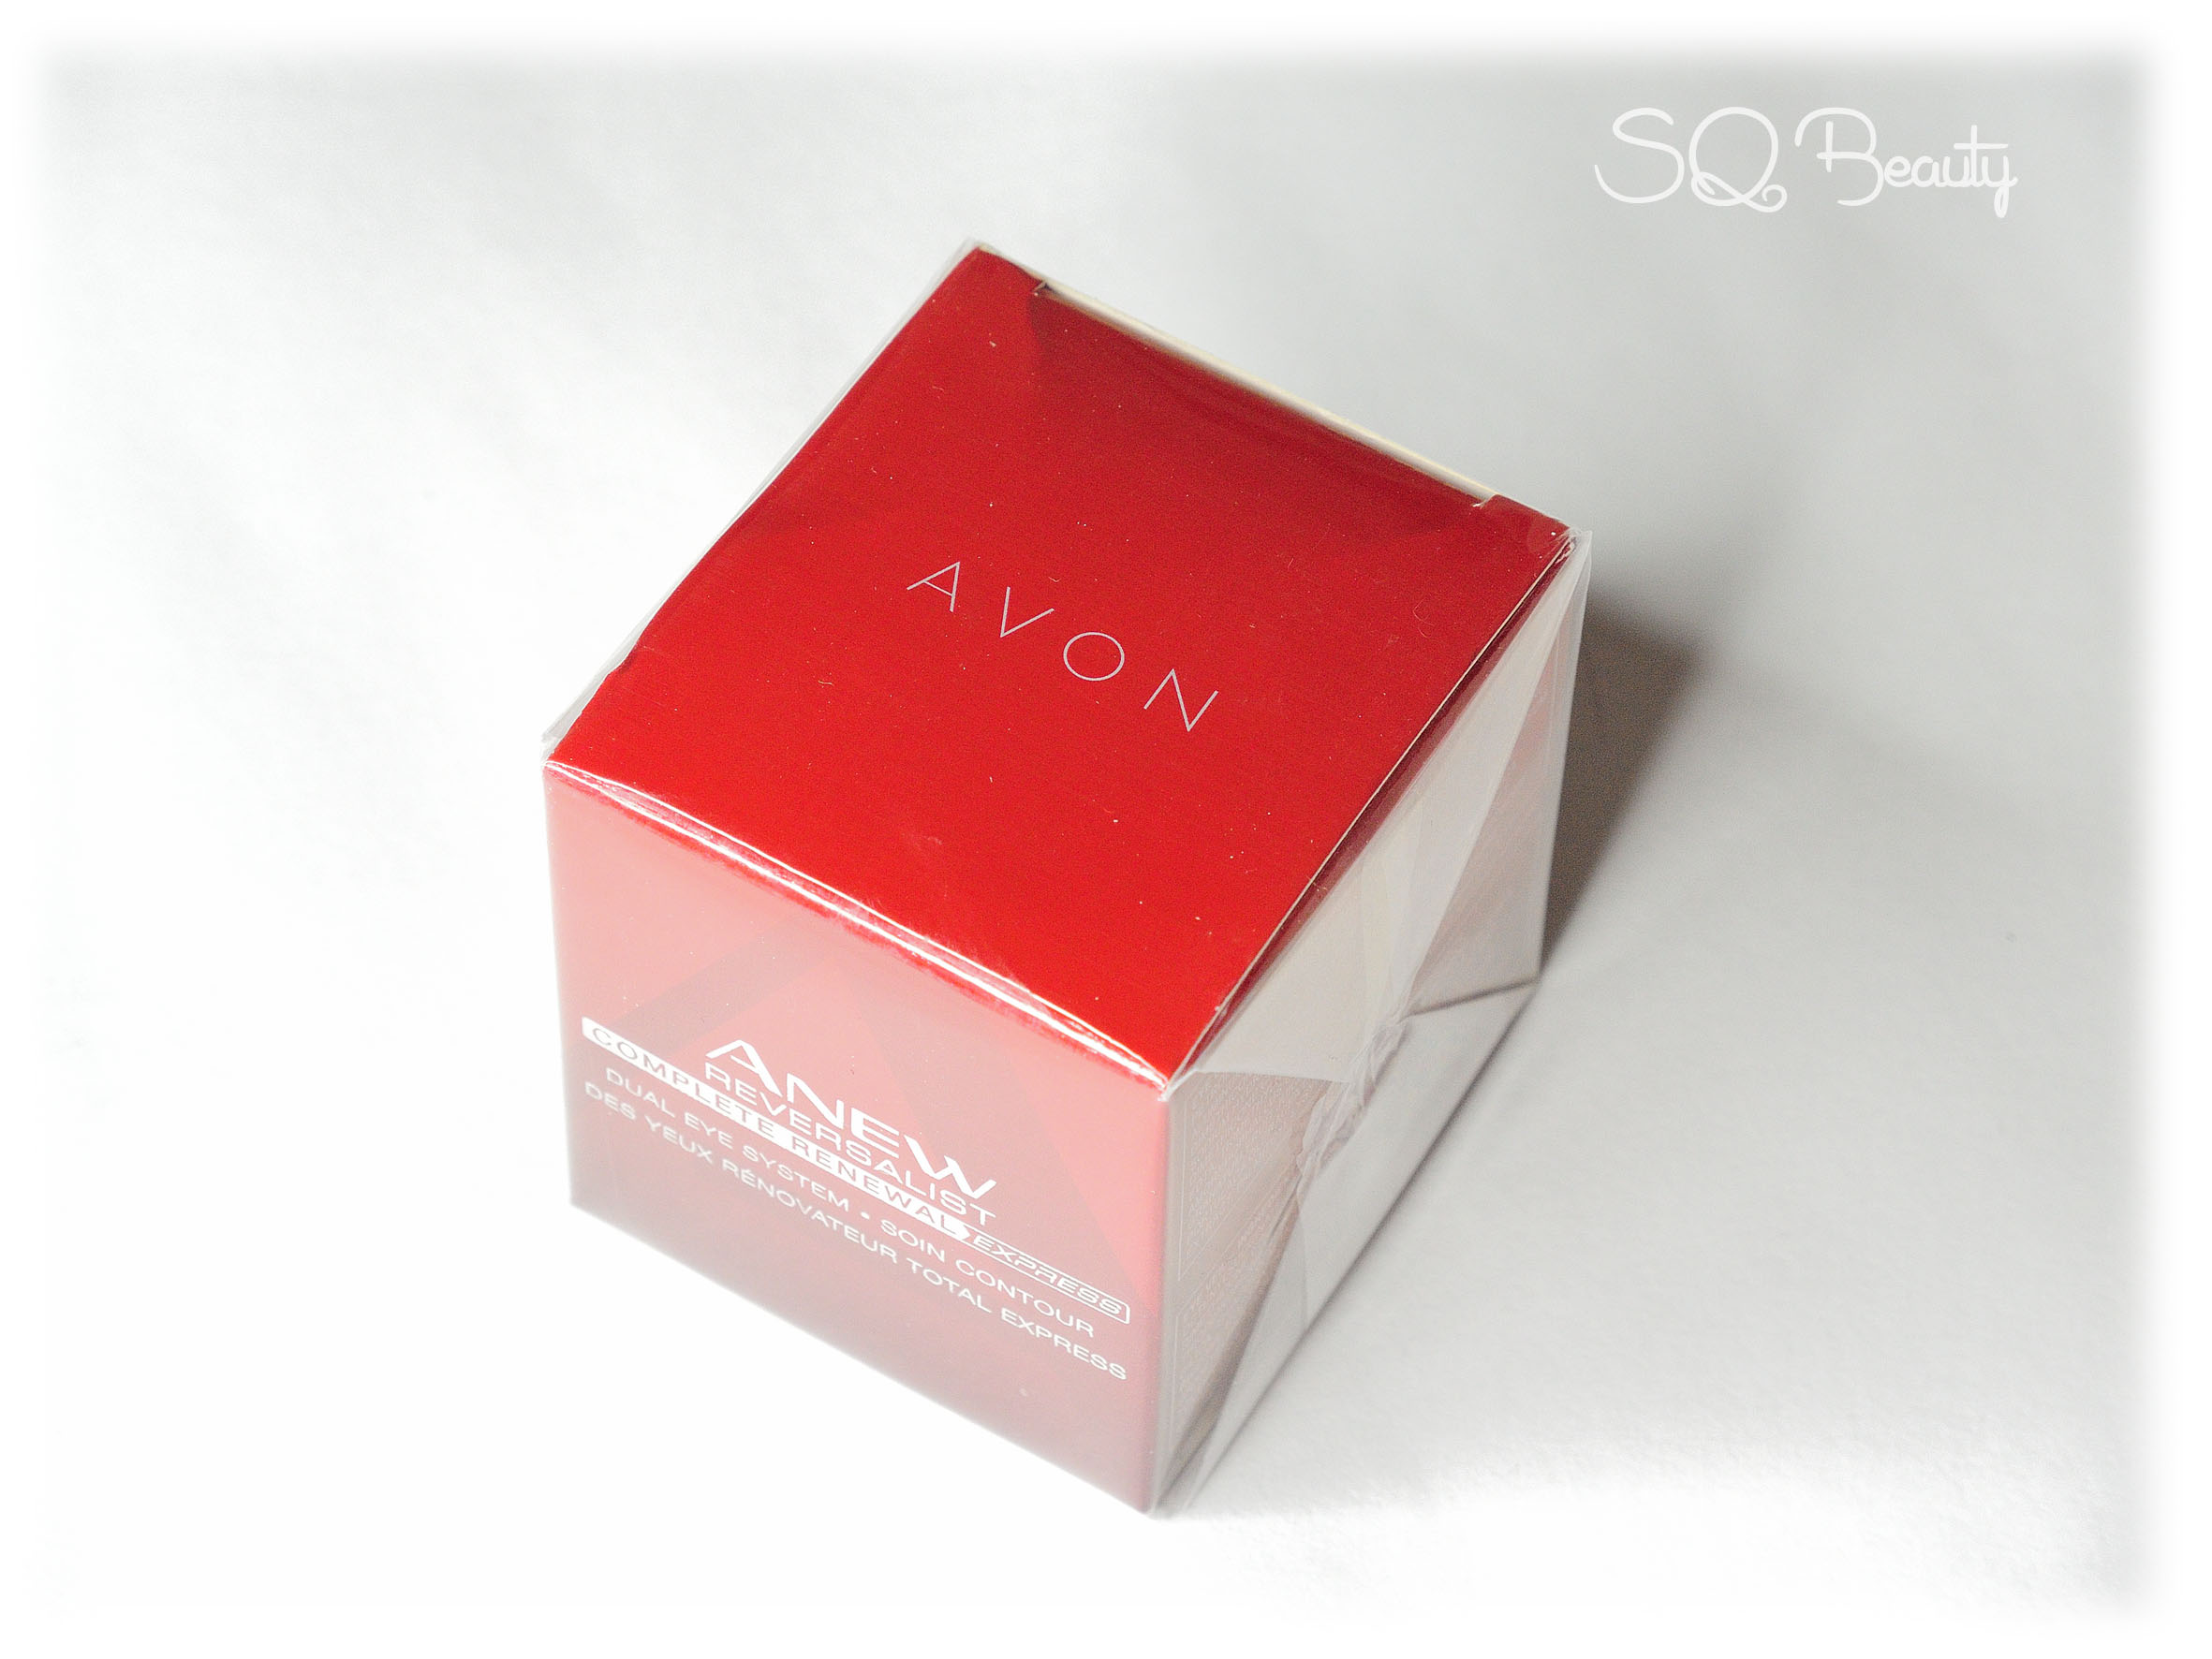 Avon Anew +40 Silvia Quiros SQ Beauty